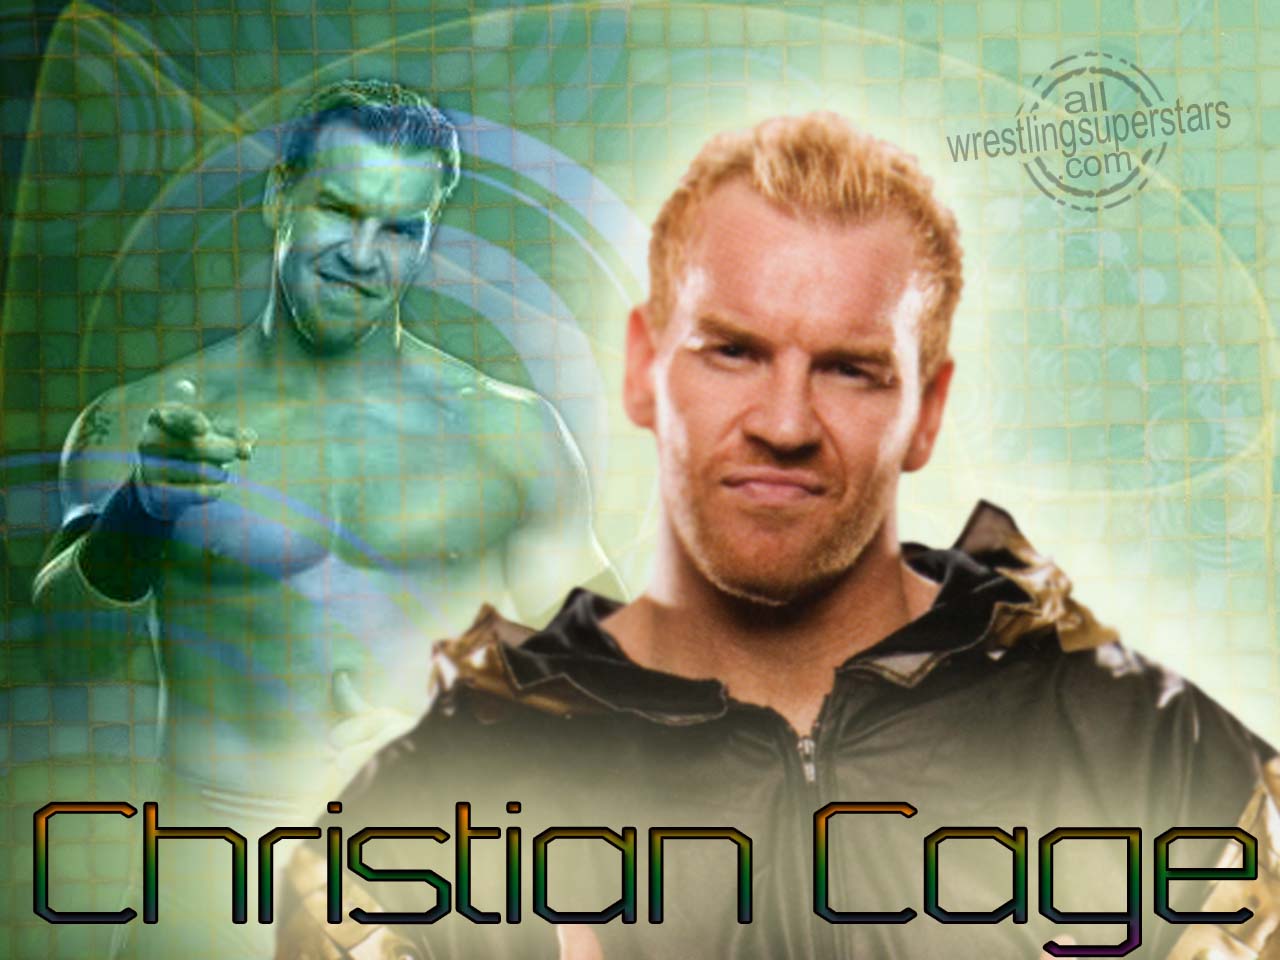 WWE WALLPAPERS: Christian. Christian Cage. Christian wallpaper. Christian picture. Christian image. Christian photo. wwe Christian. Christian wwe. Christian. WWE Superstars. wwe